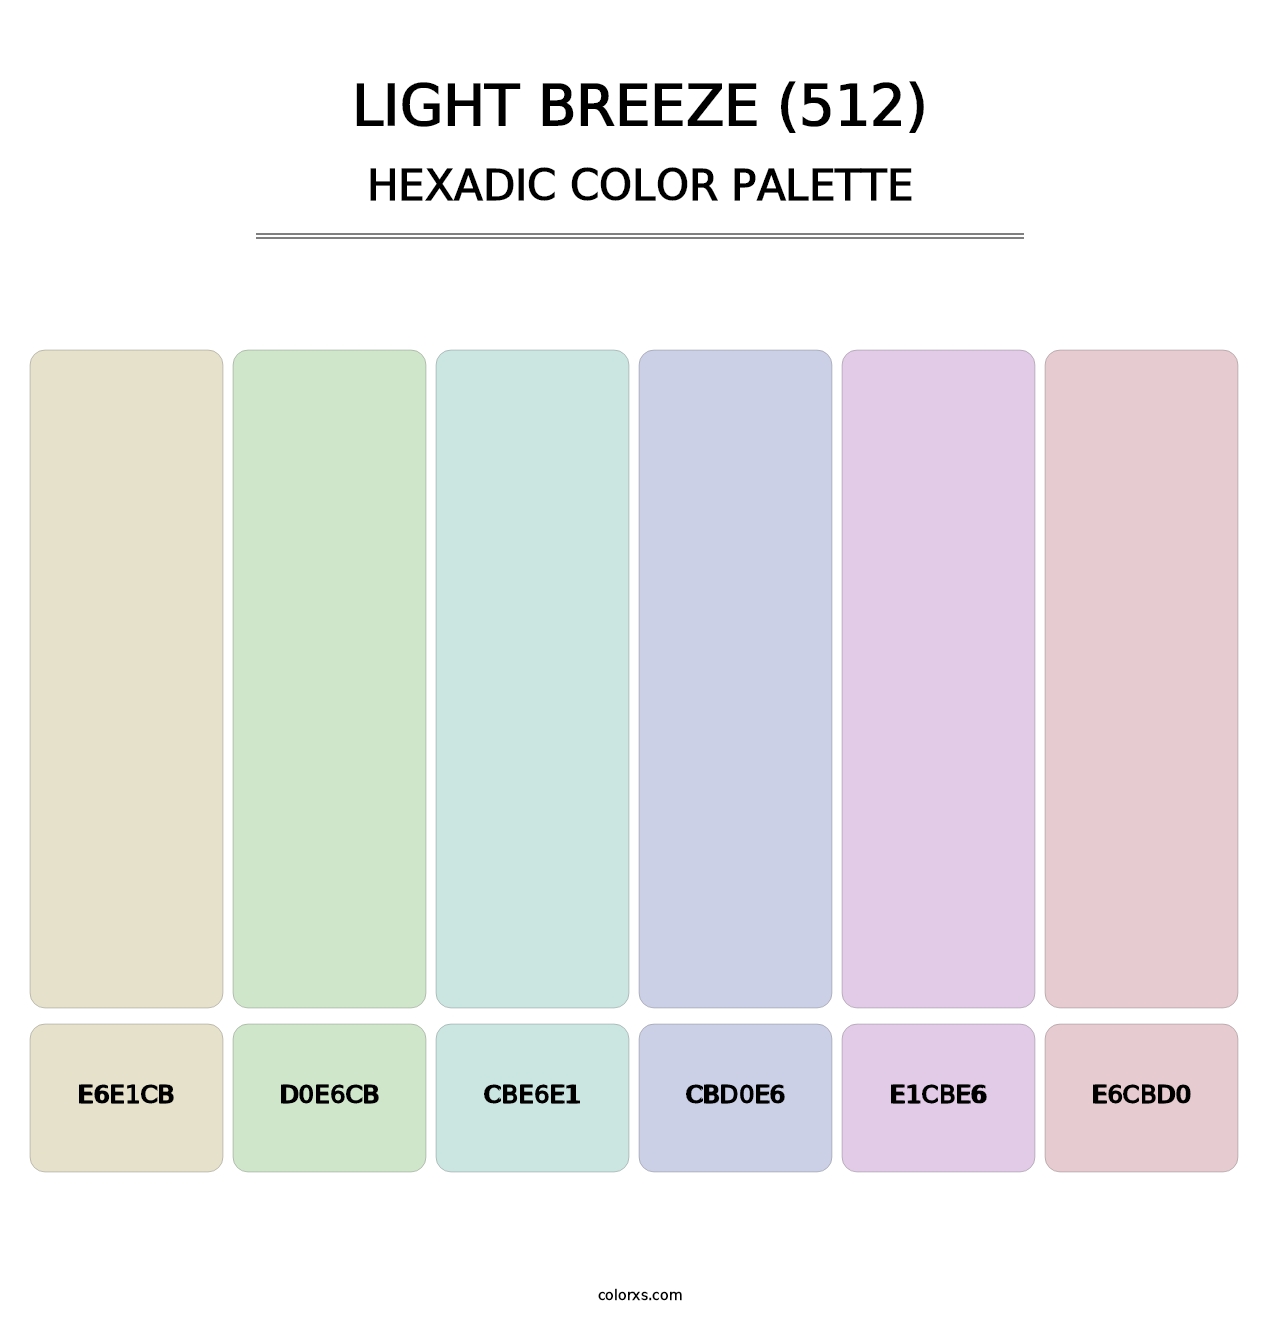 Light Breeze (512) - Hexadic Color Palette